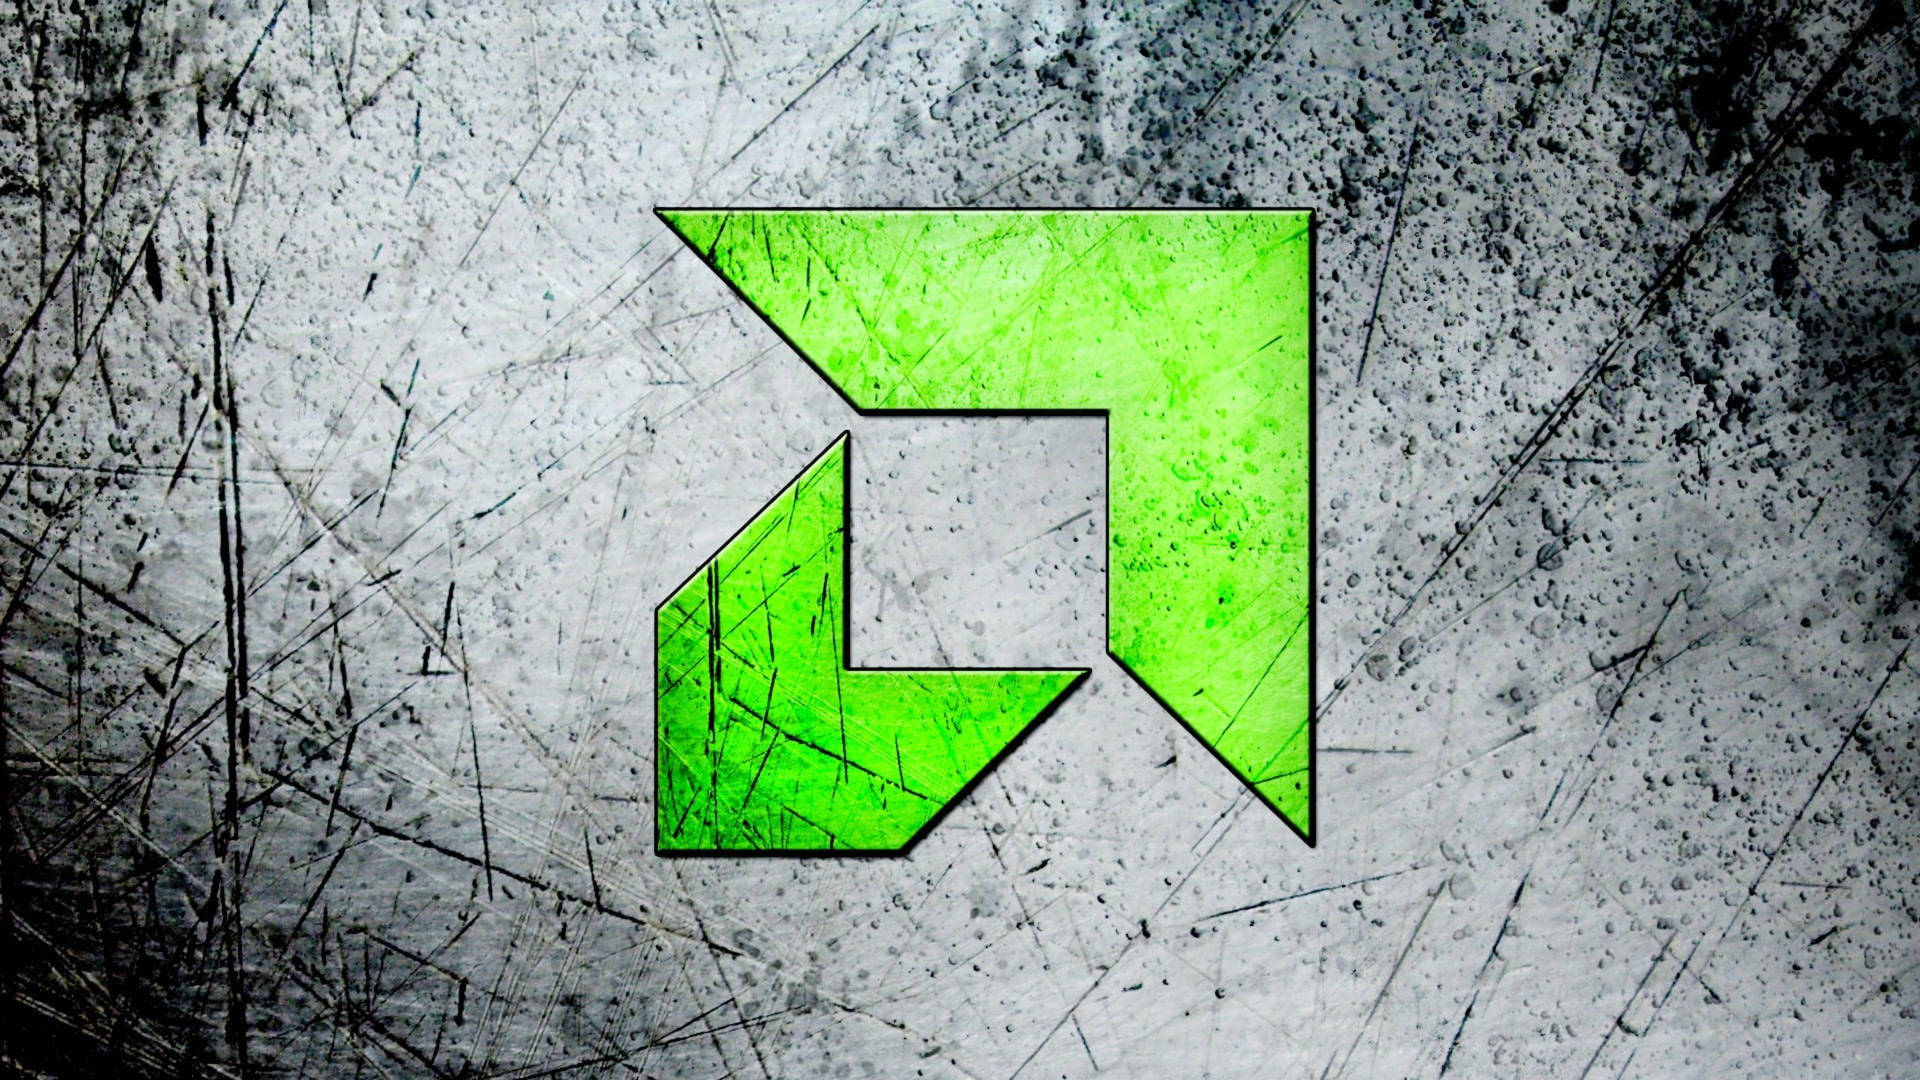 Caption: Amd Logo In Green Grunge Style